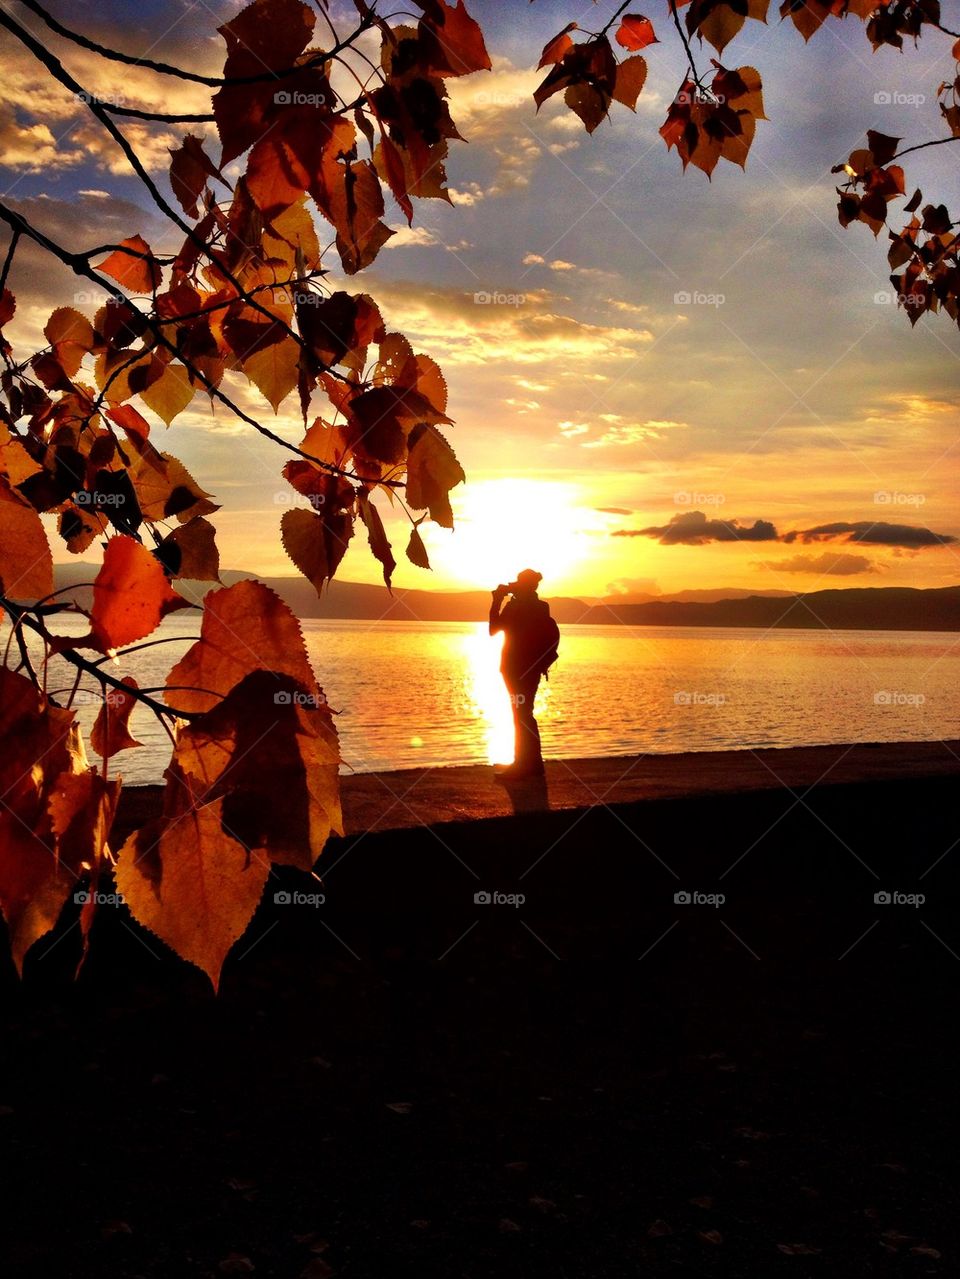 Capturing the sunset at Lake Ohrid